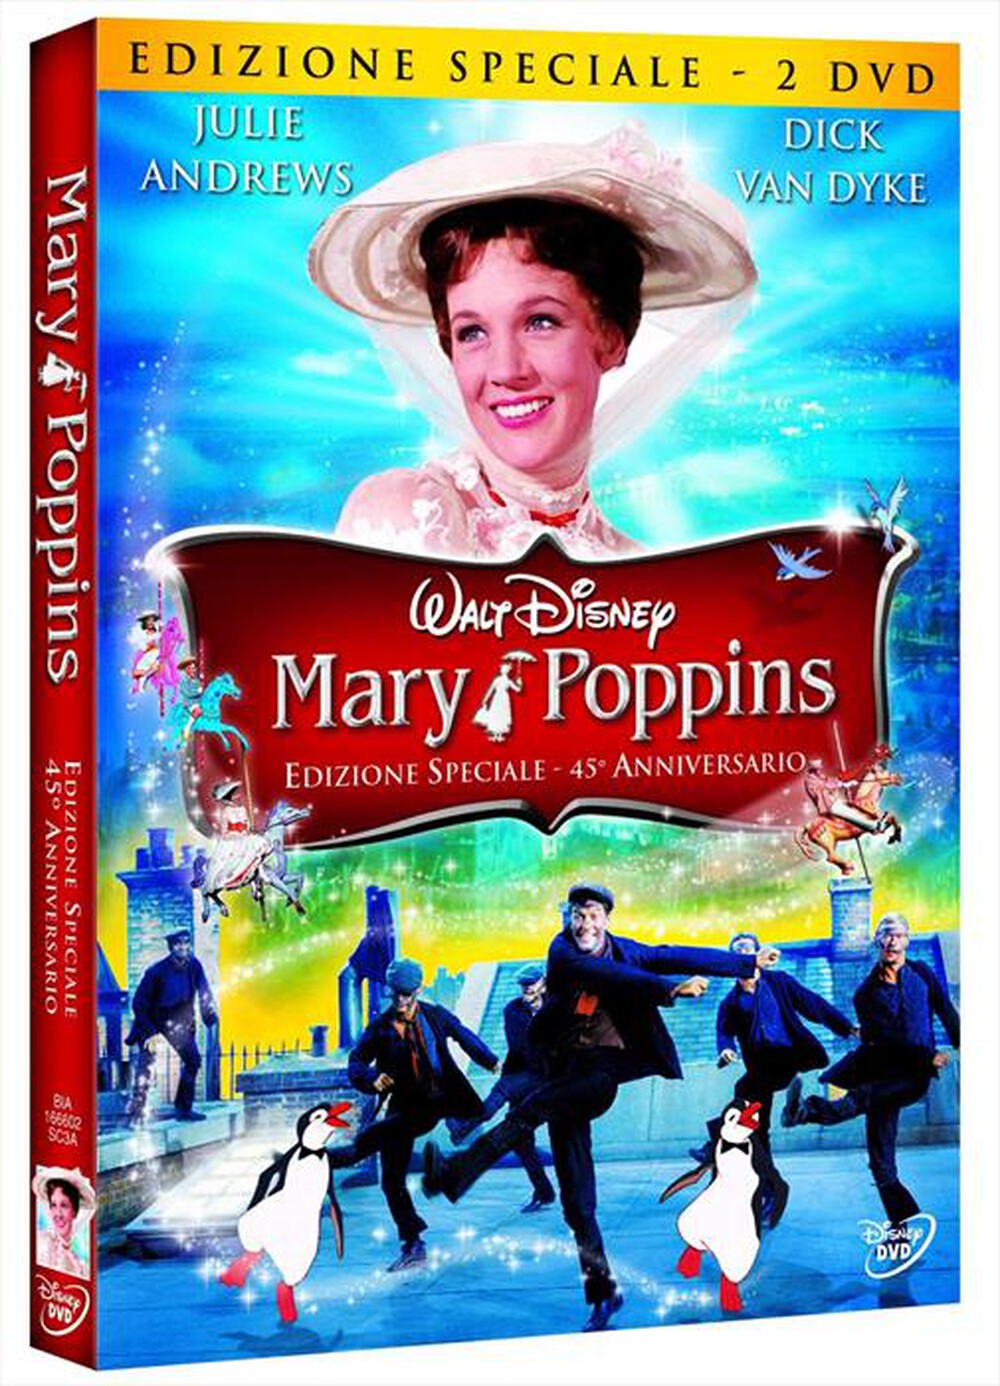 "WALT DISNEY - Mary Poppins (45 Anniversario) (SE) (2 Dvd)"